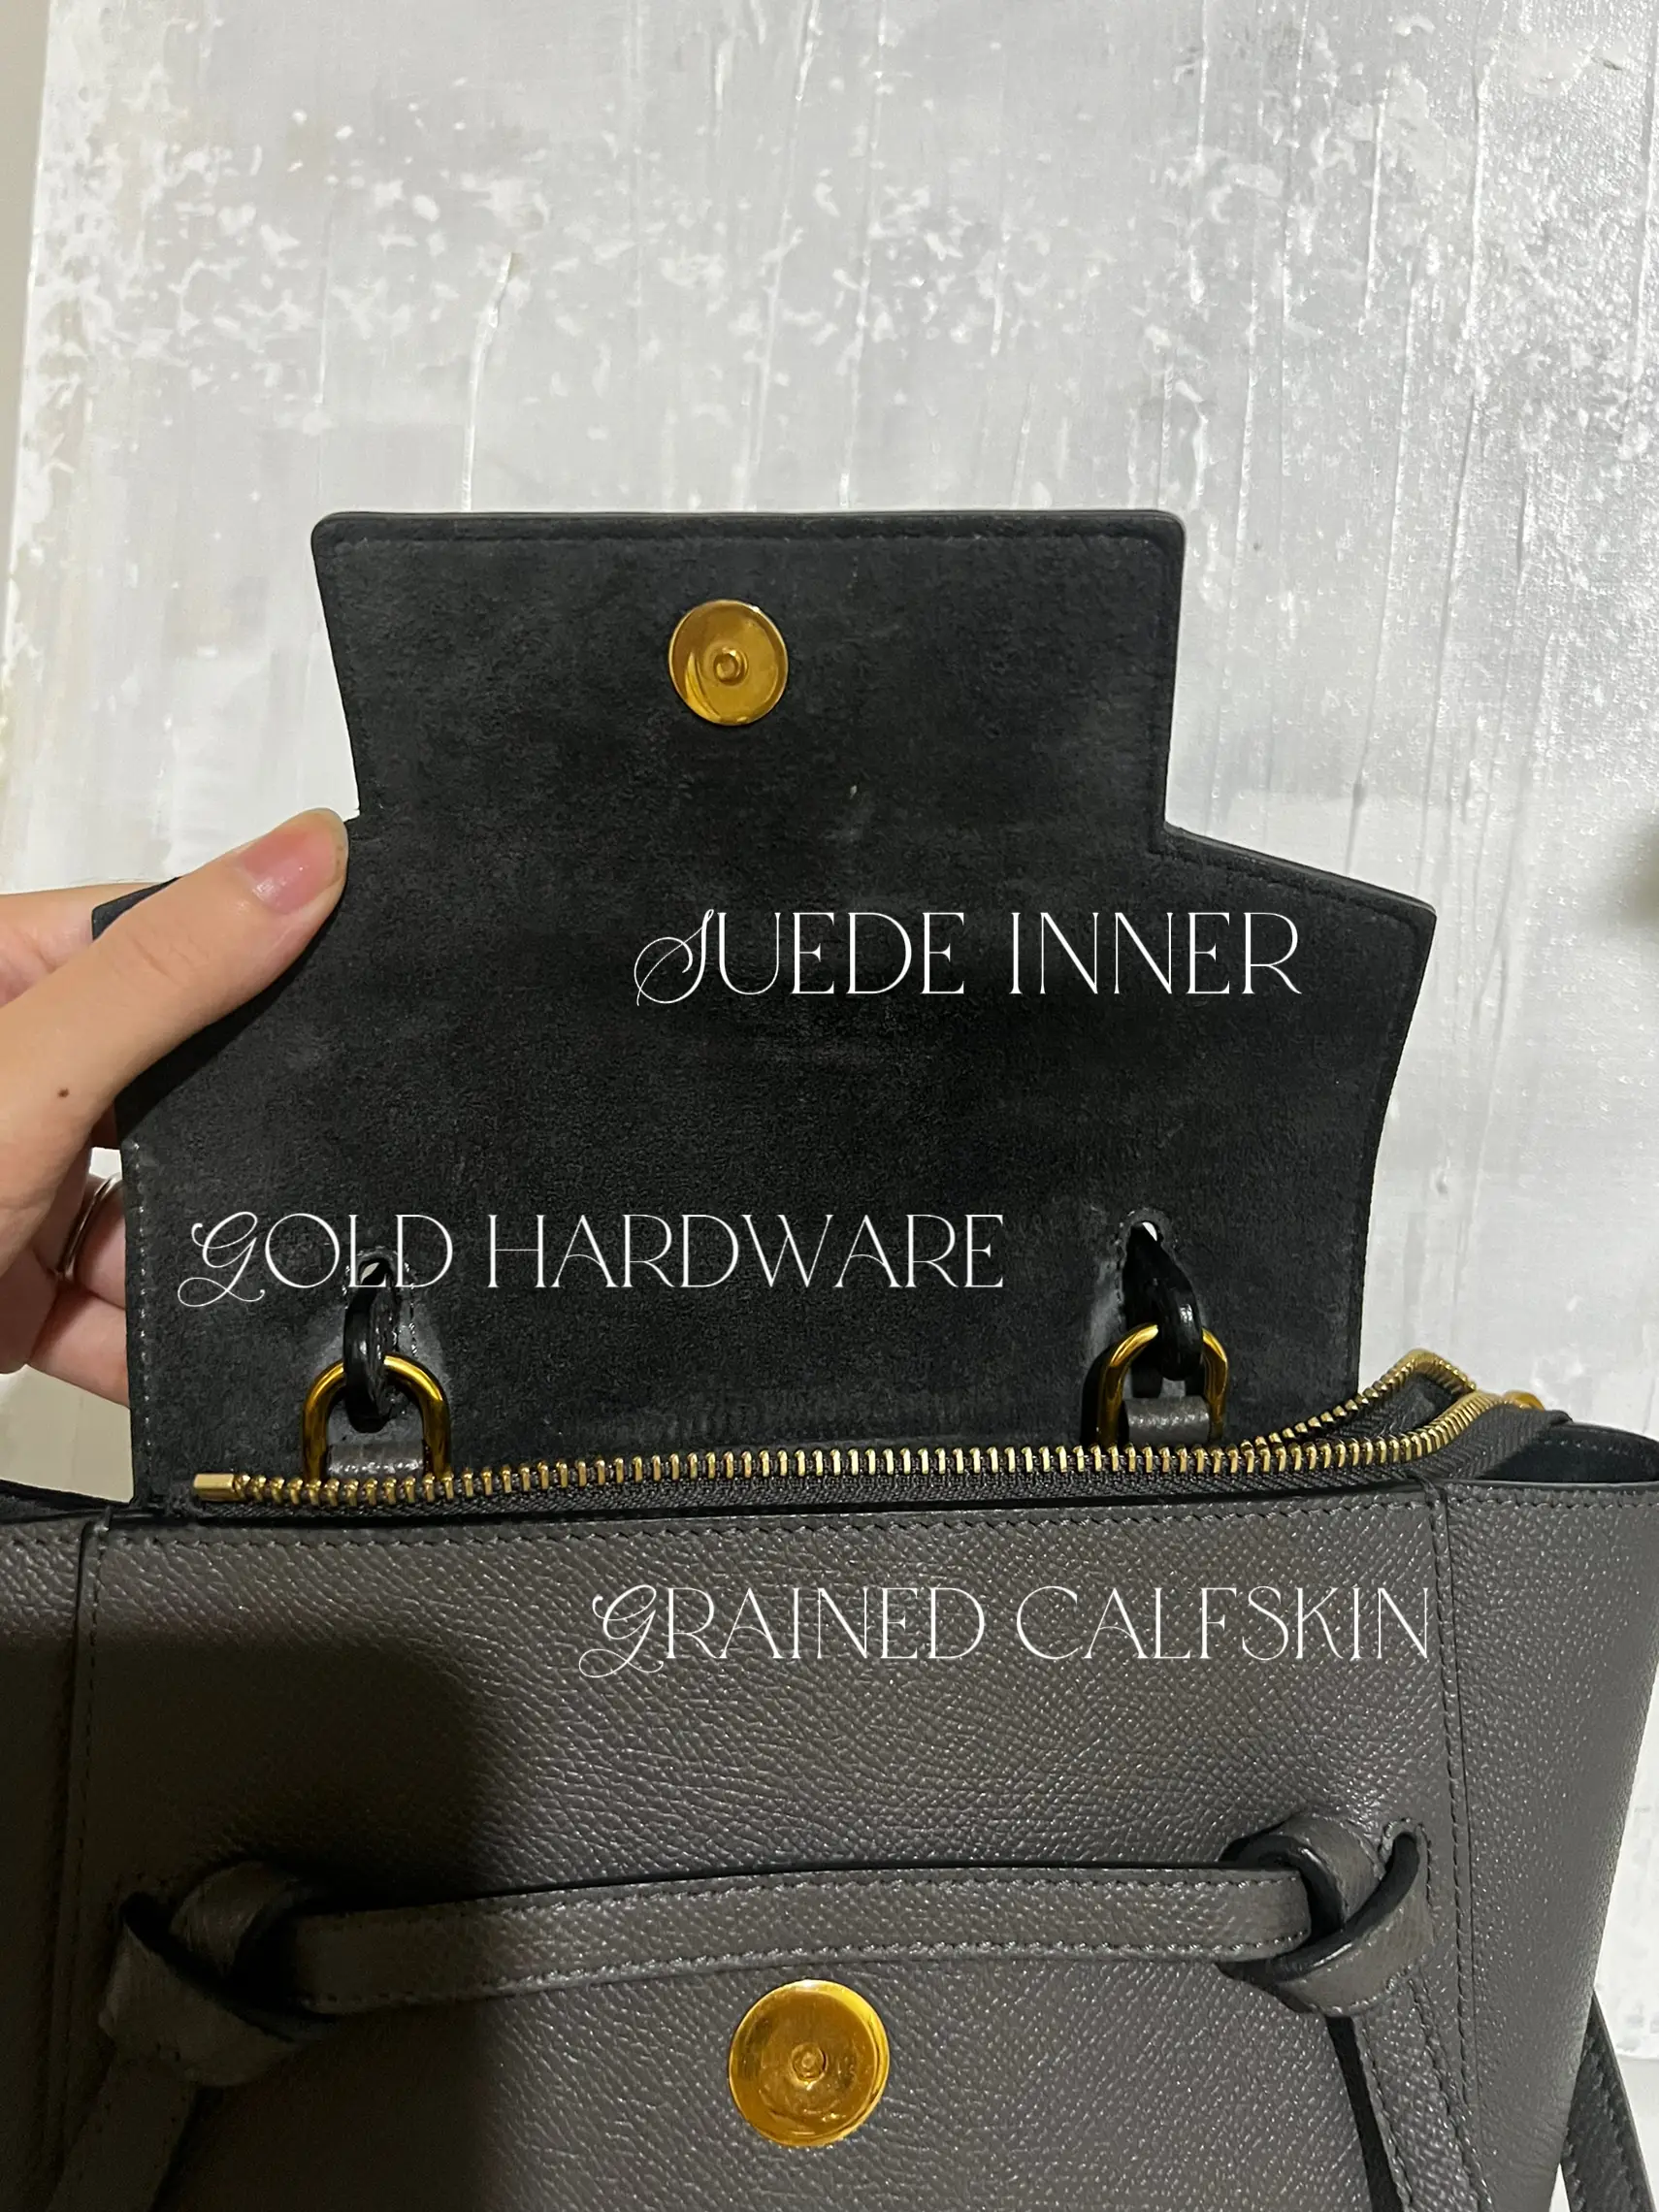 Celine Nano Belt Bag, Old Vs. New // Quality Difference? Hardware? New Logo?